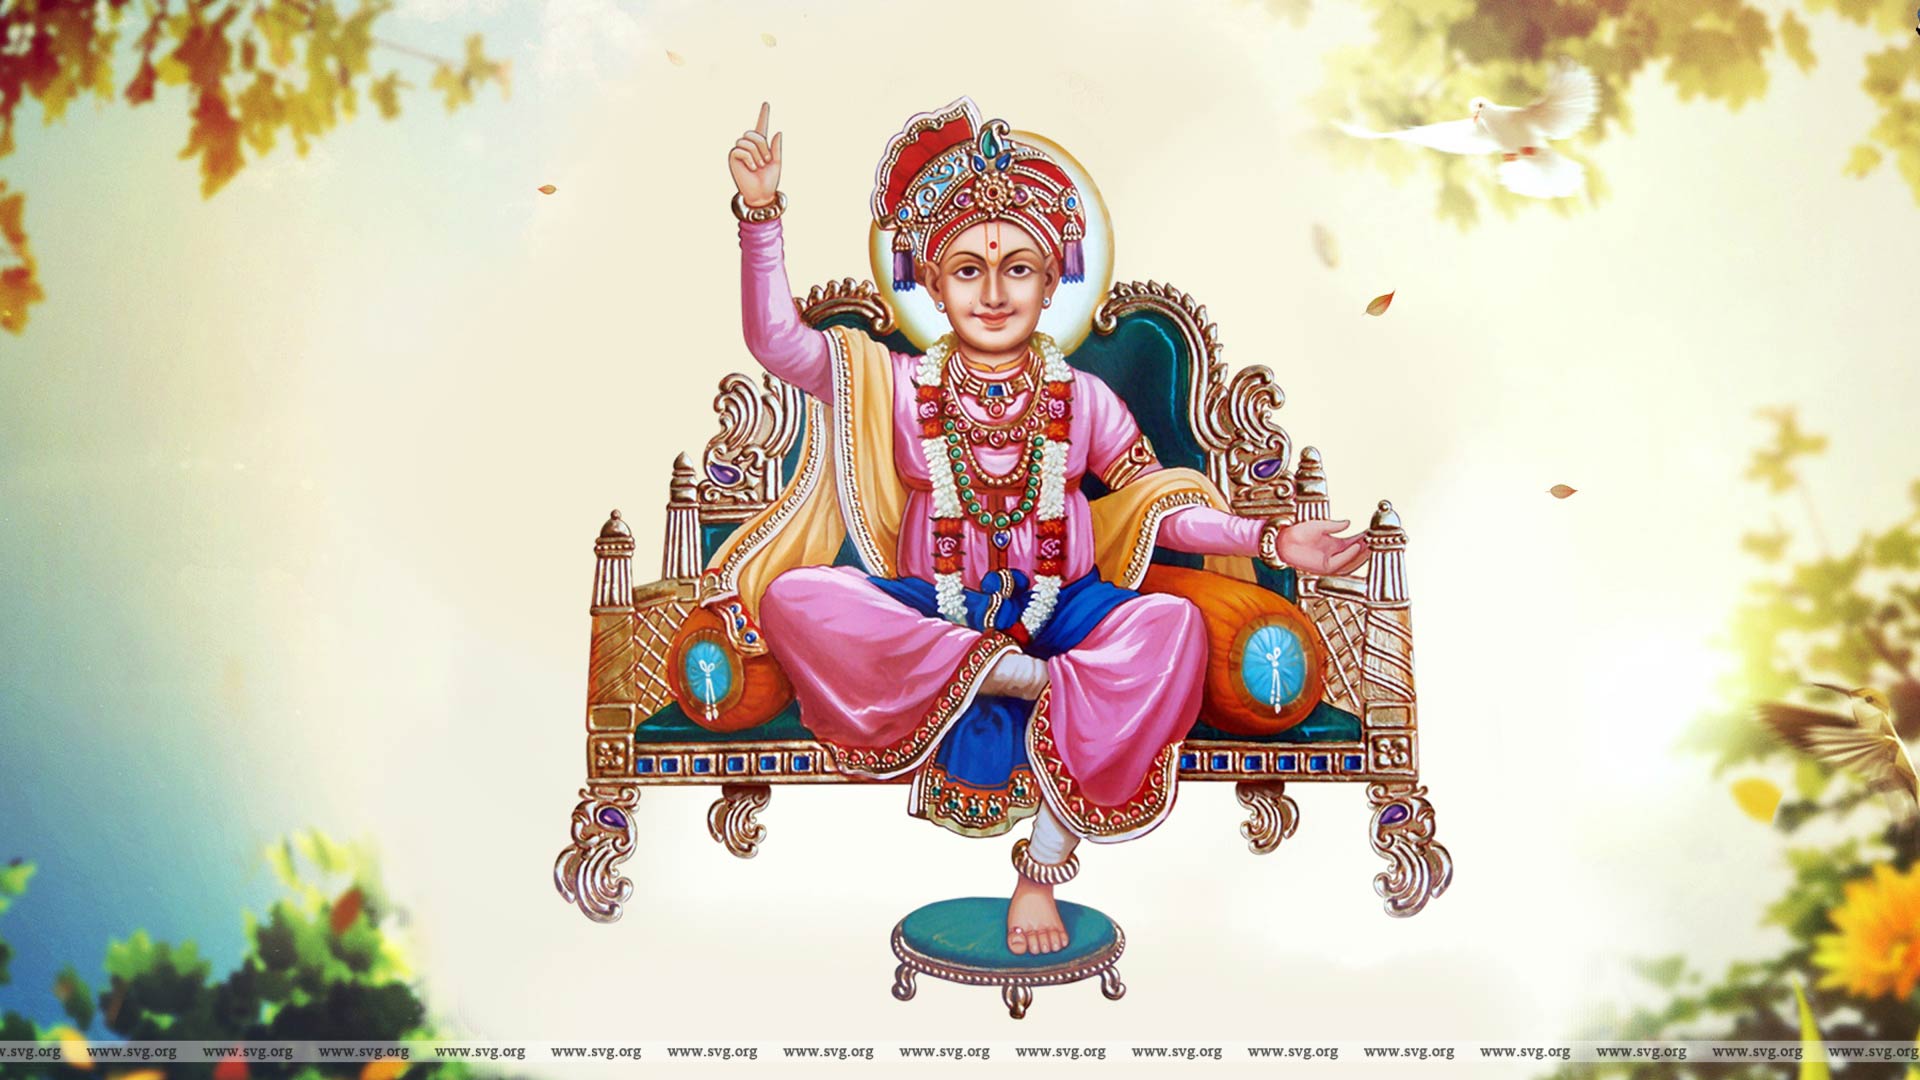 540+ Bhagwan Images Hd | Hindu God Images Wallpapers